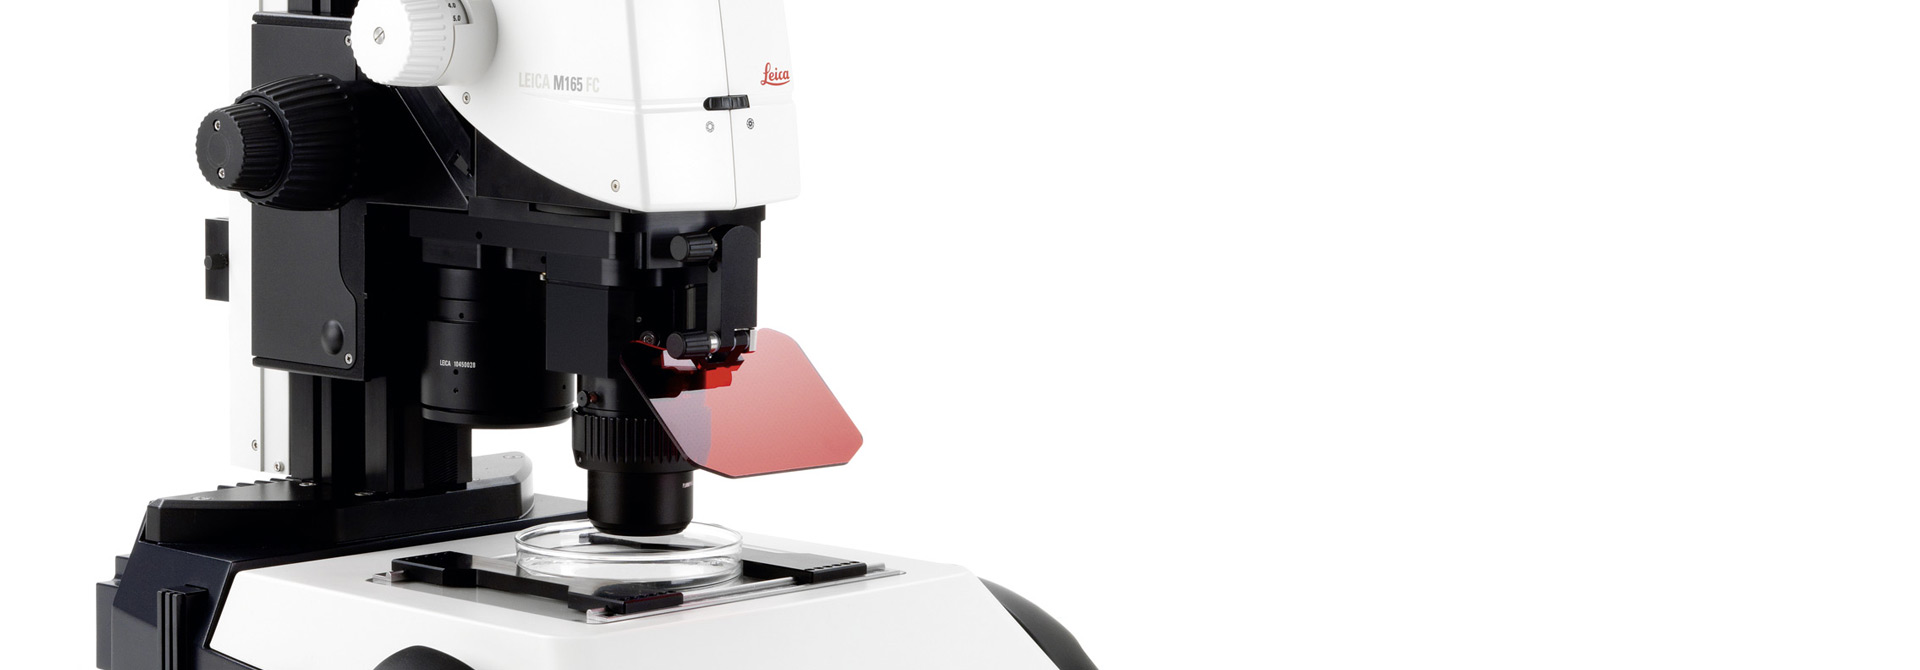 荧光立体显微镜 Leica M165 FC 和 M205 FA